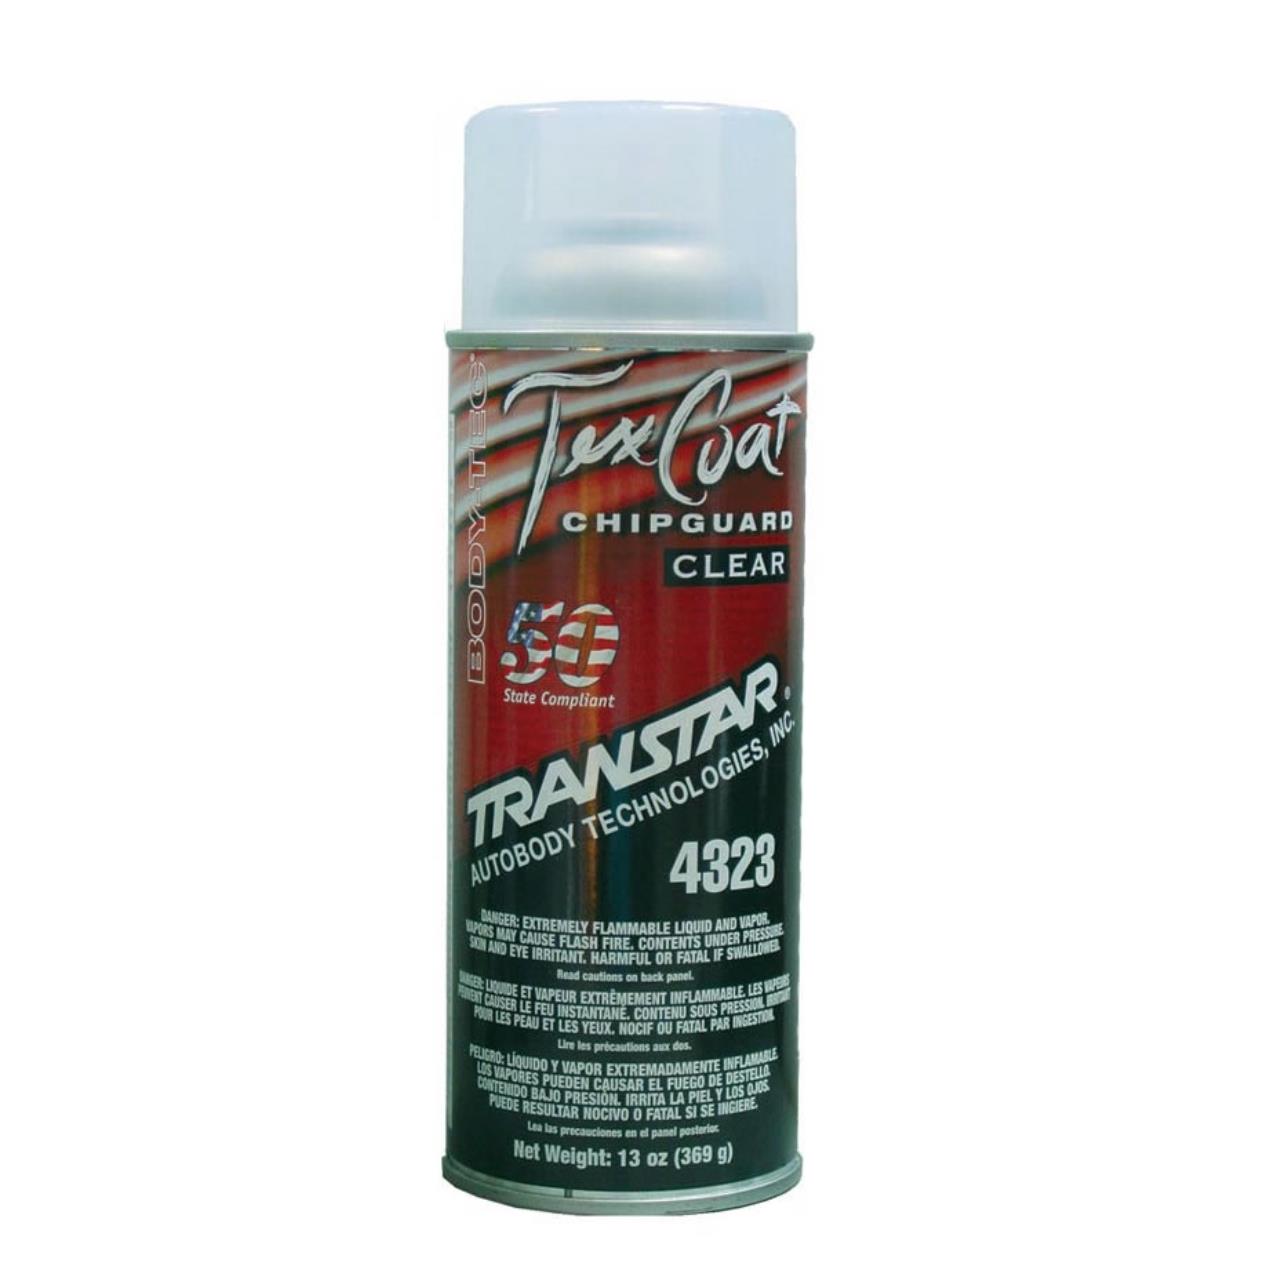 TRN-4323-tex-coat-chip-guard-clear